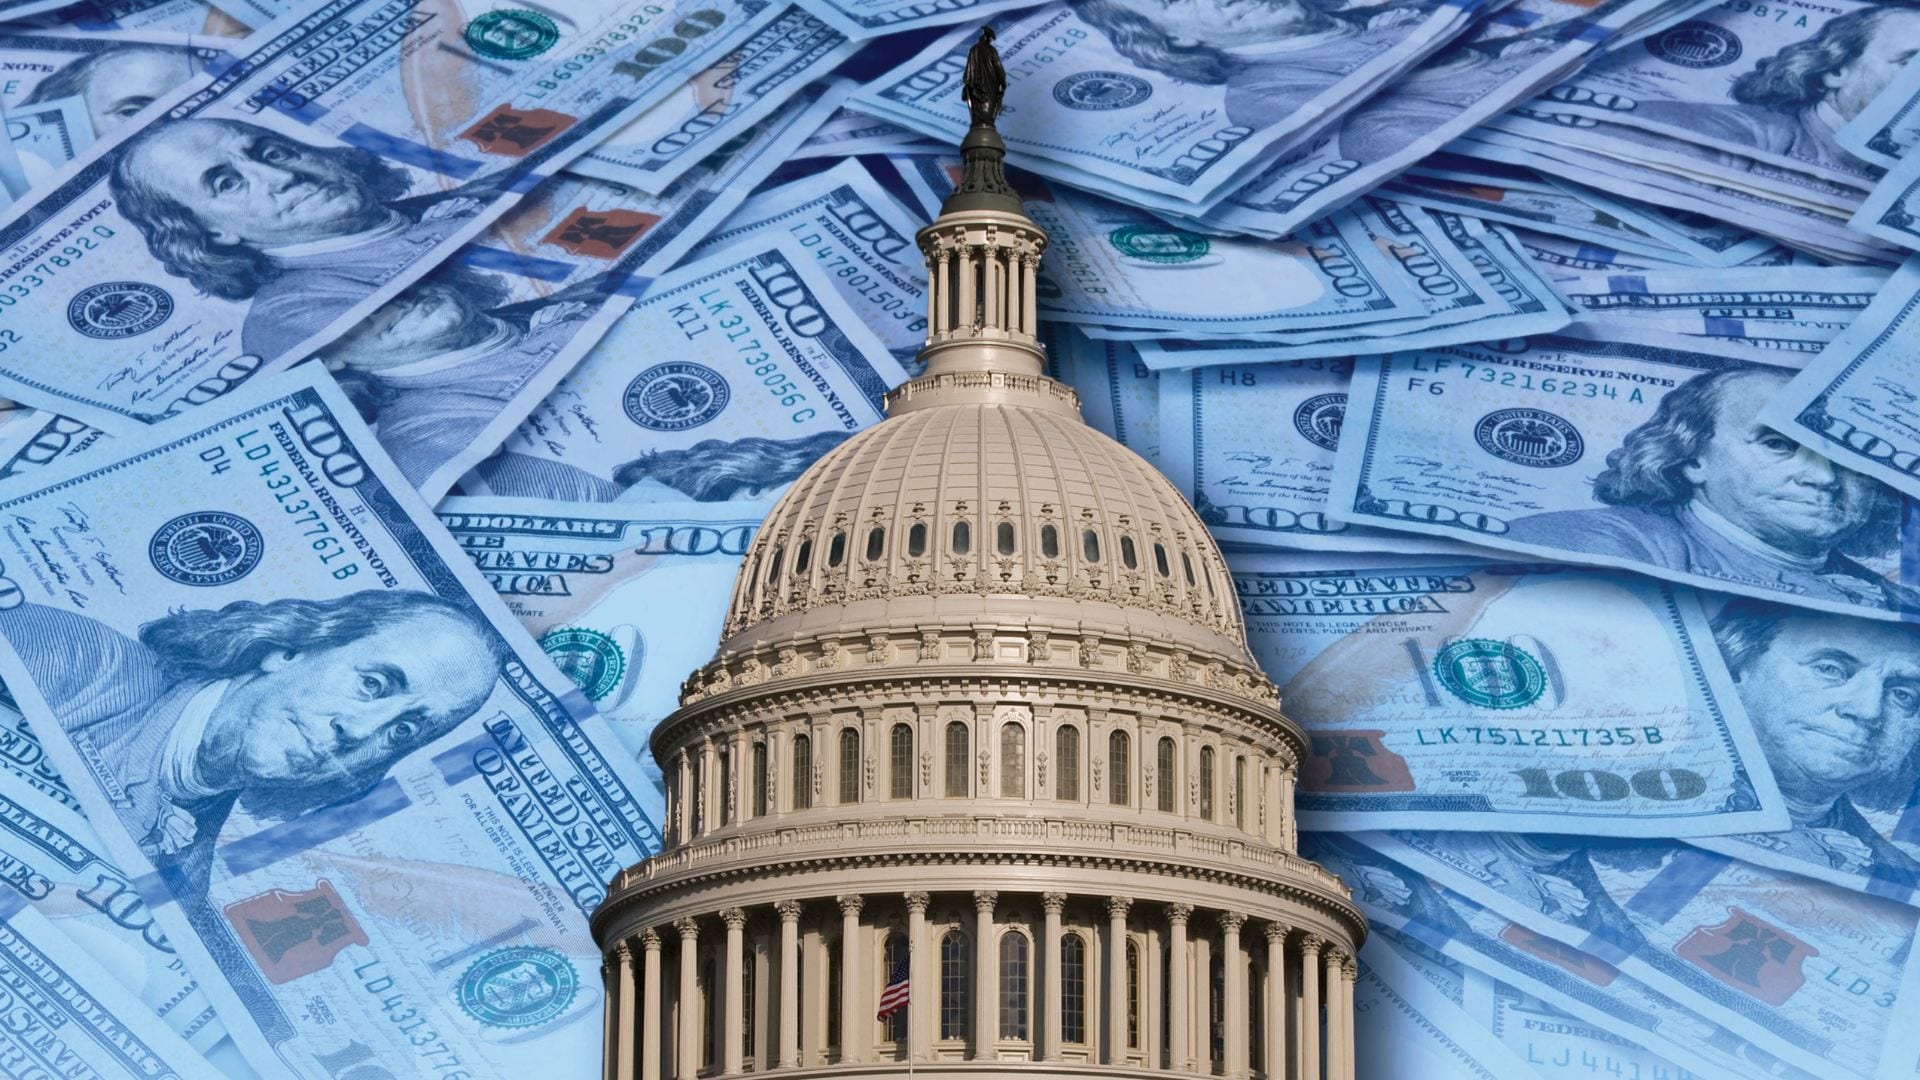 The US Capitol dome set again 100 dollar bills